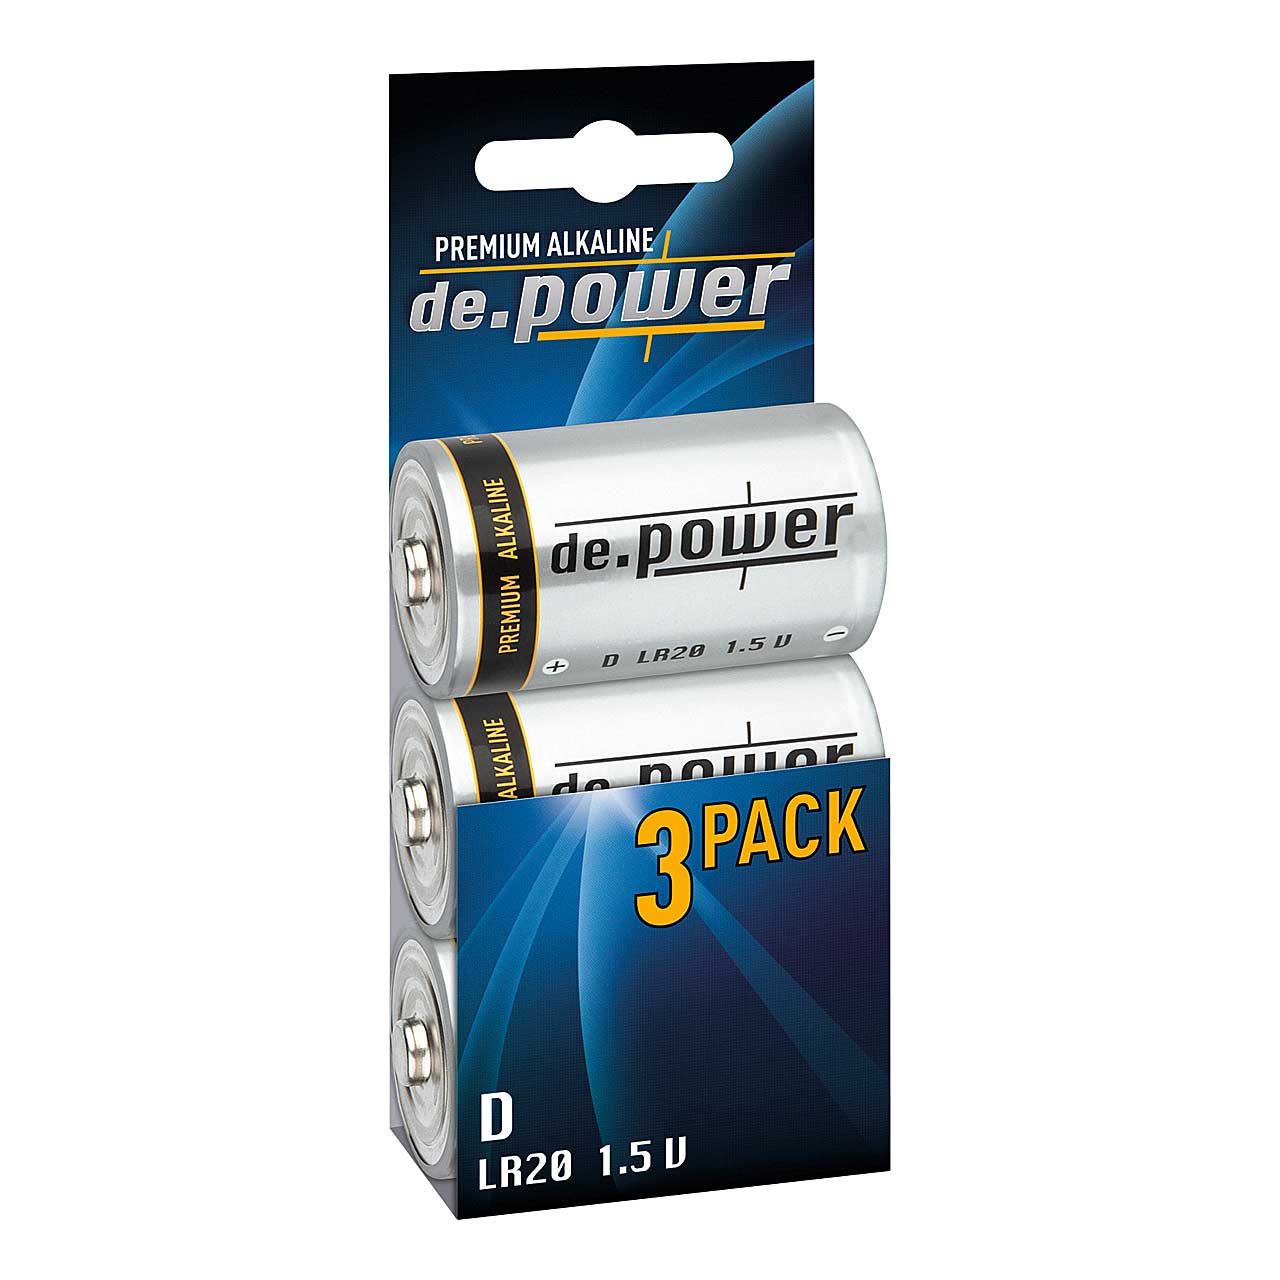 de.power Premium Alkaline D-Cell-Batterie, 3er Pack